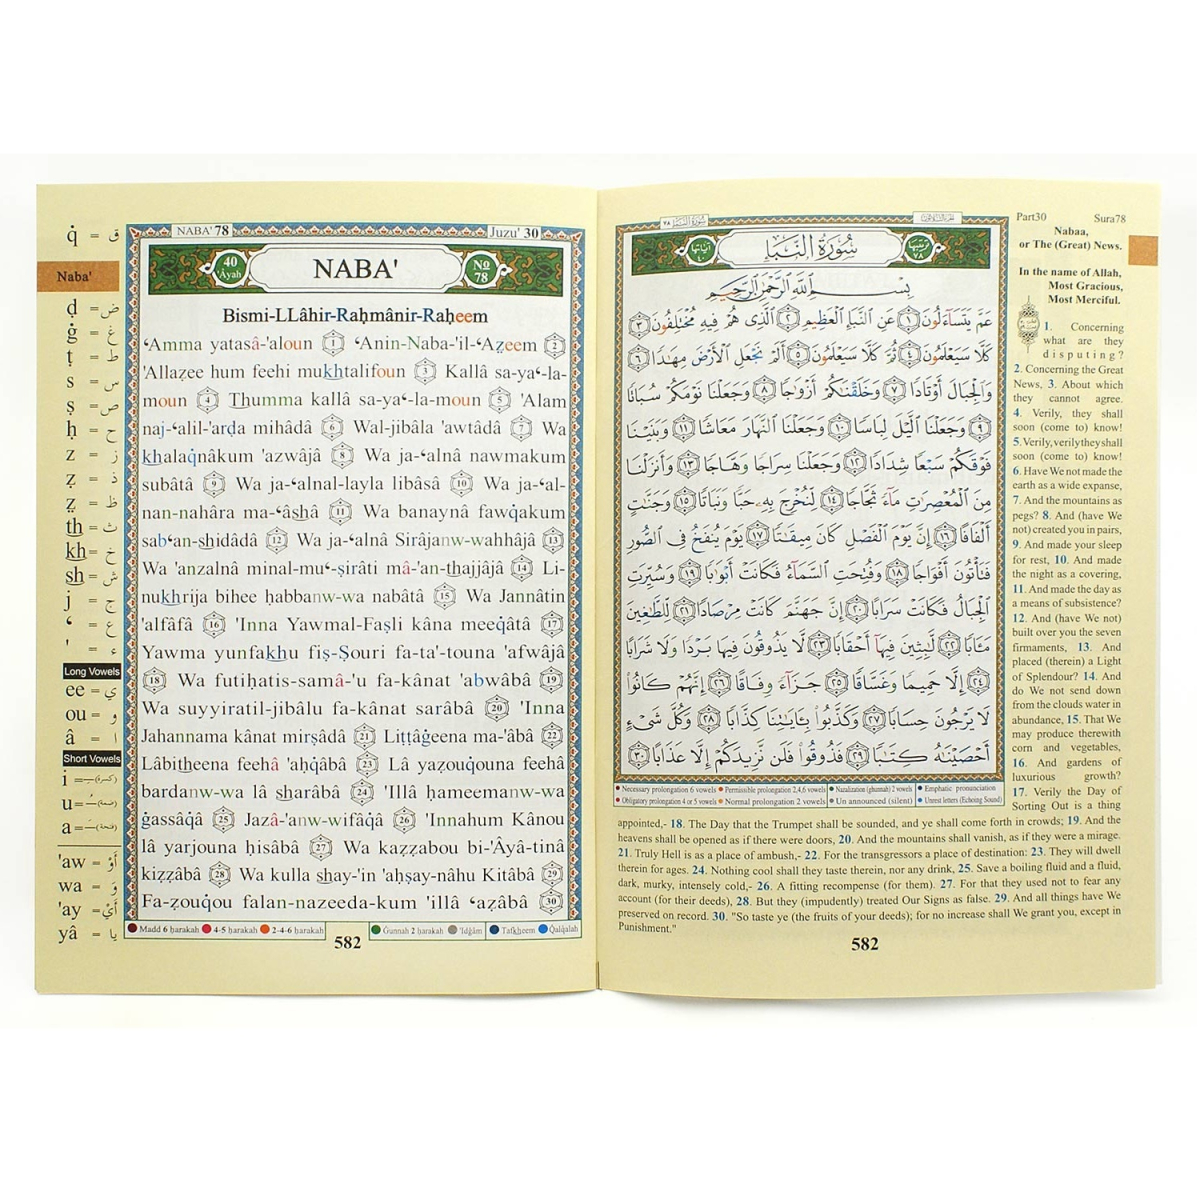 Tajweed Quran with English Translation and Transliteration Juzz Amma Large Size 17x24cm ( Hafs Uthmani Script)